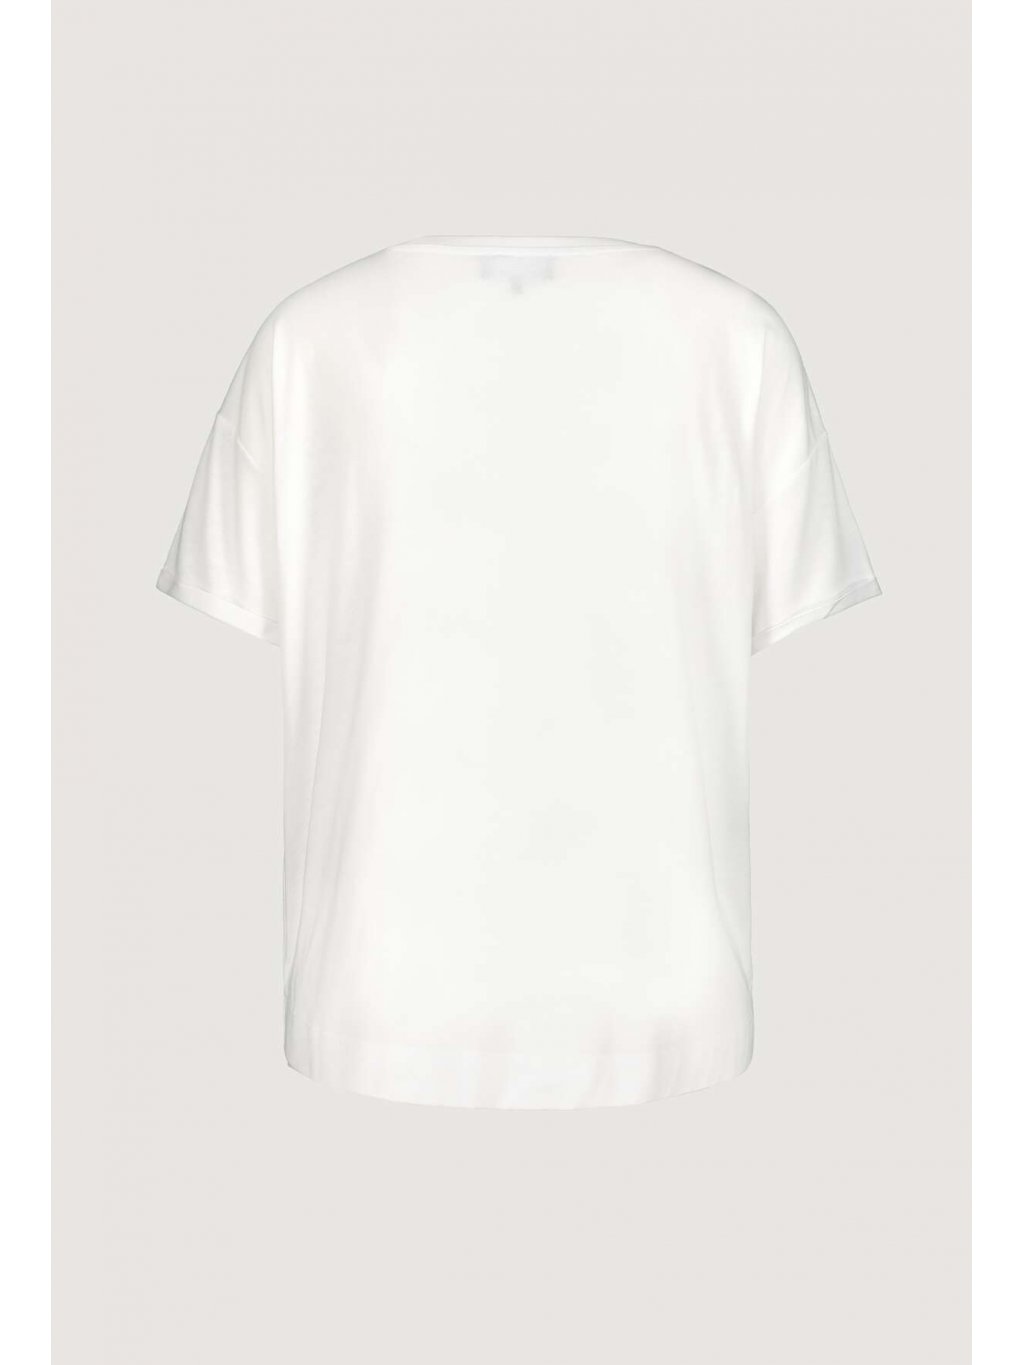 Tričko Monari 6796 bílé s grafikou v krokantově hnědé